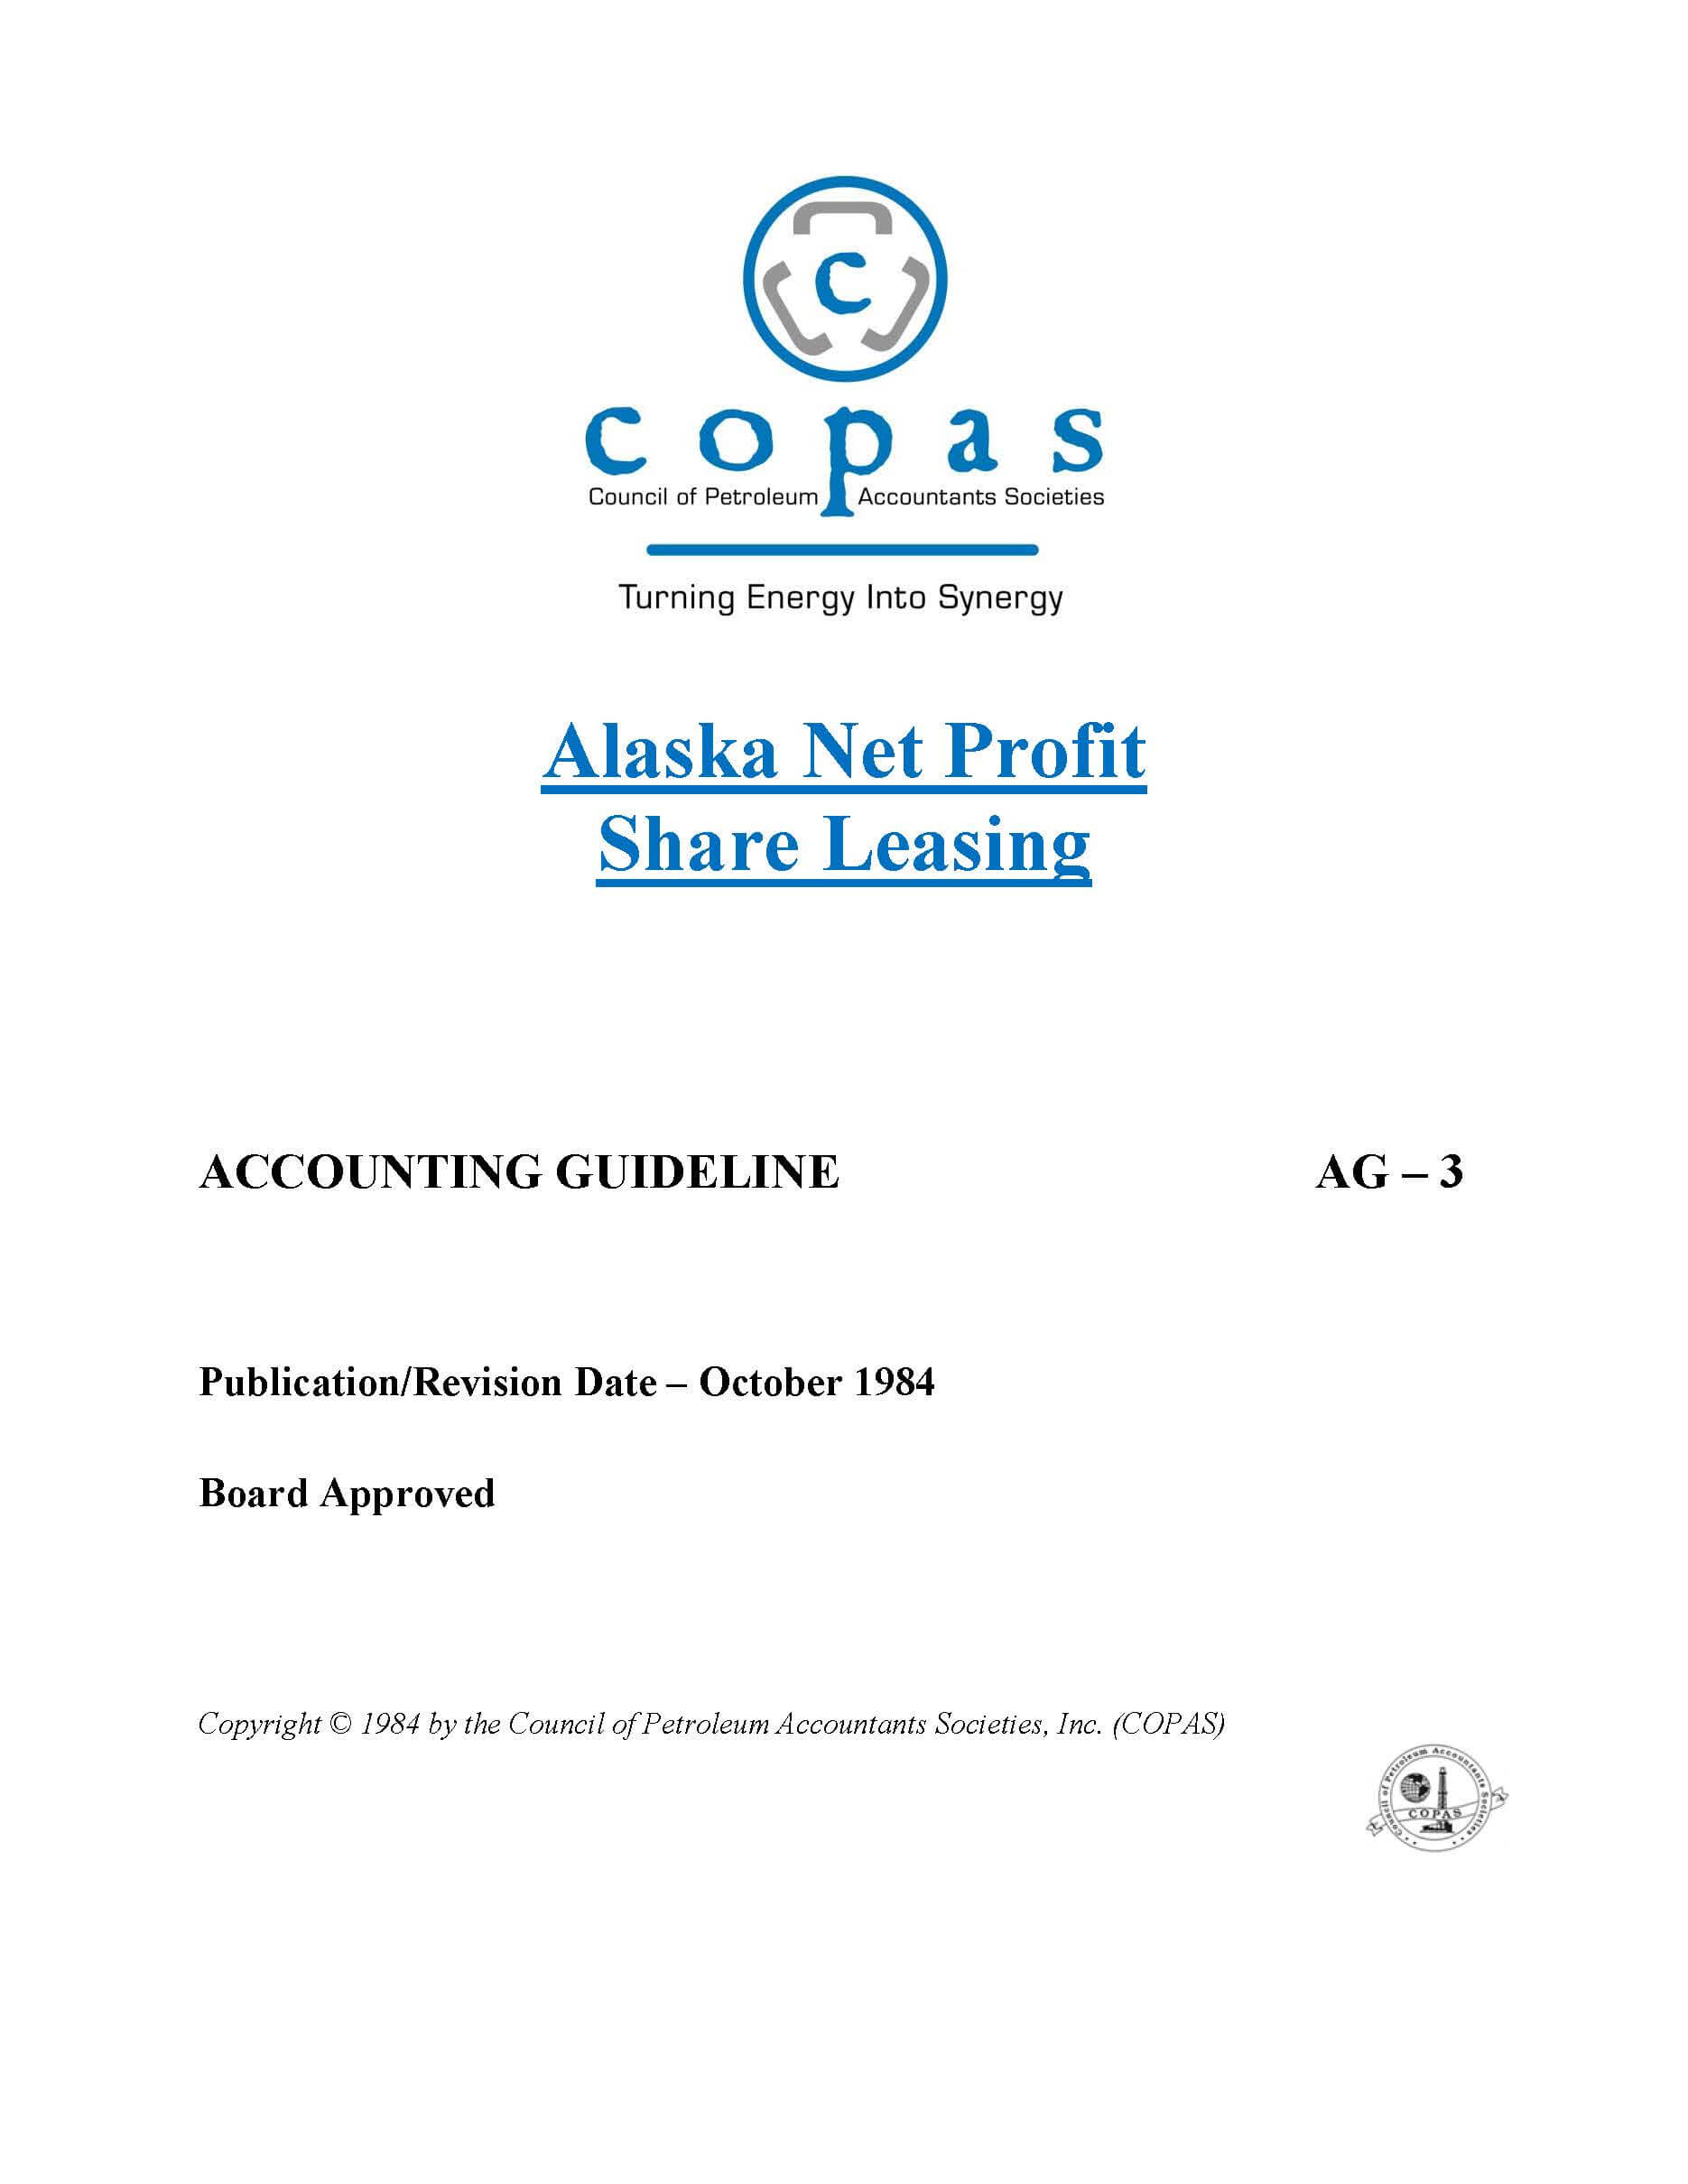 AG-3 Alaska Net Profit Share Leasing - products AG 3 Alaska Net Profit Share Leasing - Council of Petroleum Accountants Societies